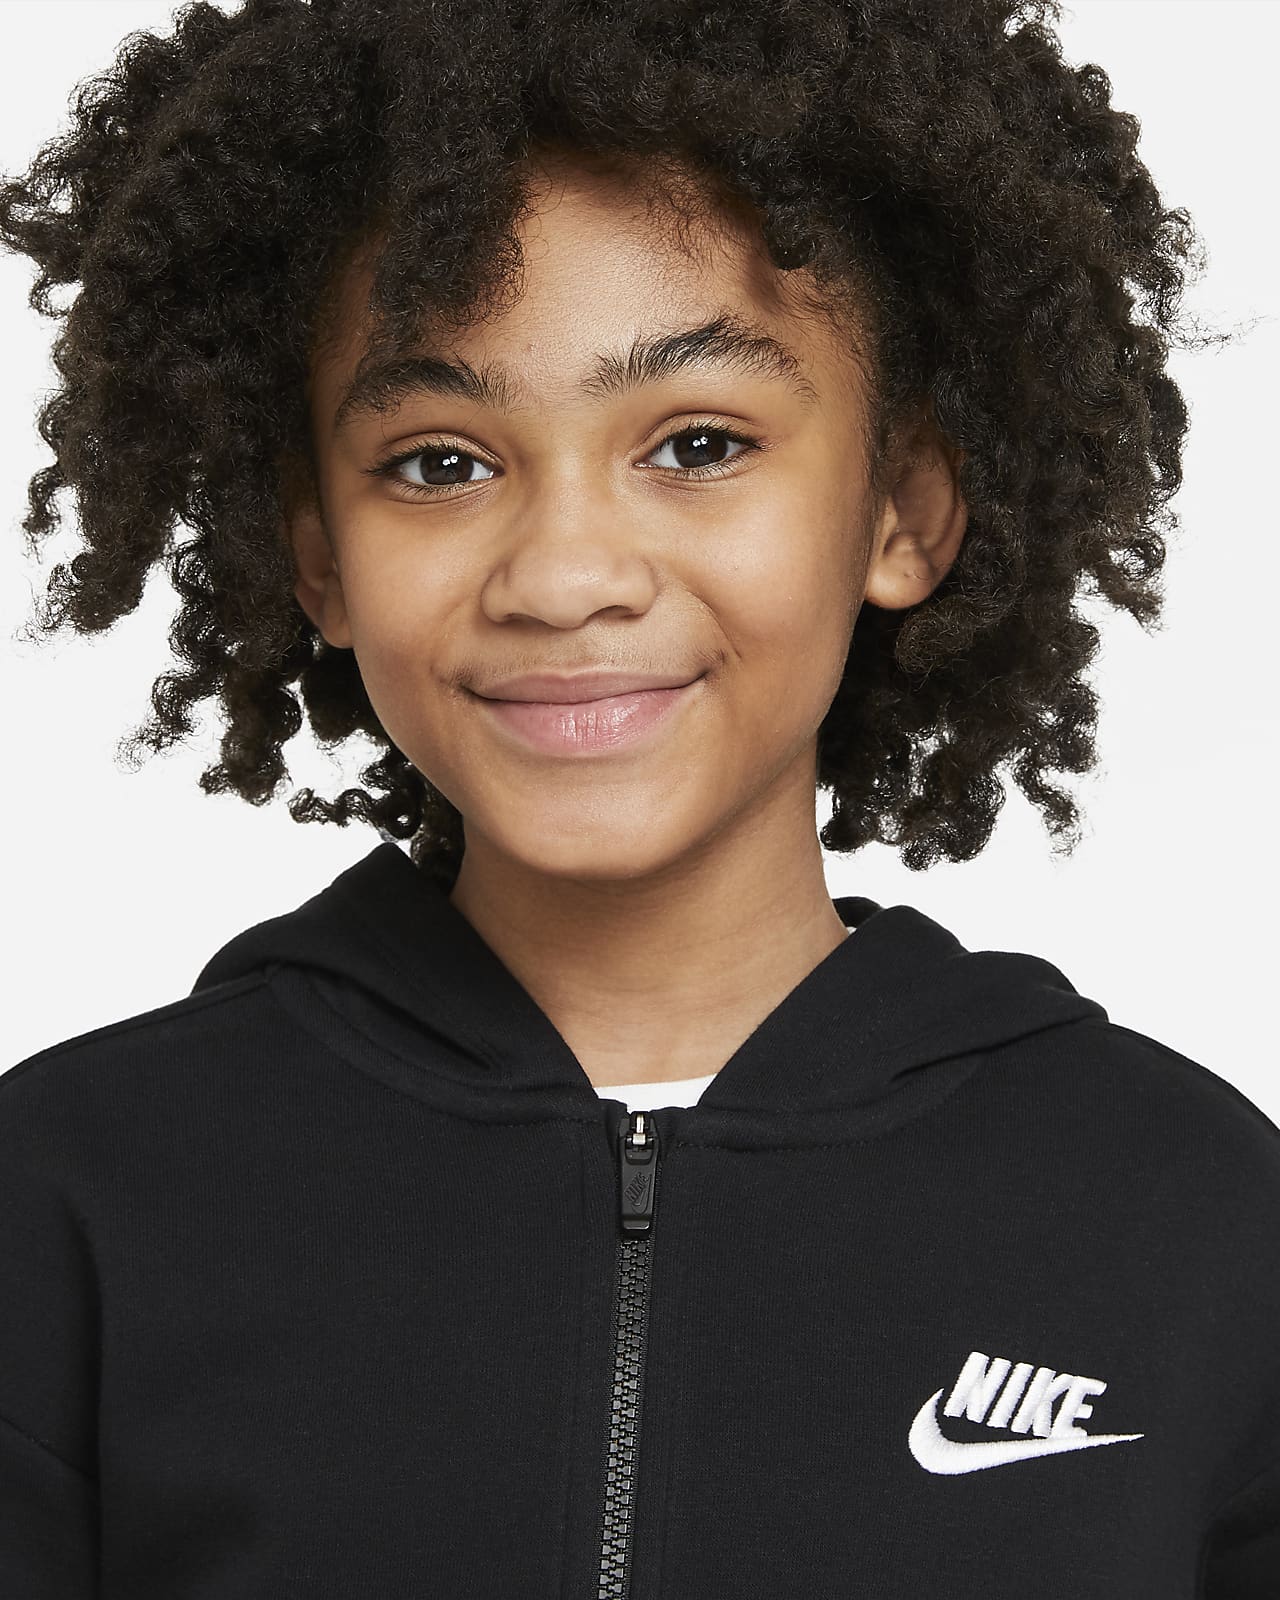 Nike Sportswear Club Fleece Older Kids' (Girls') Full-Zip Hoodie ...